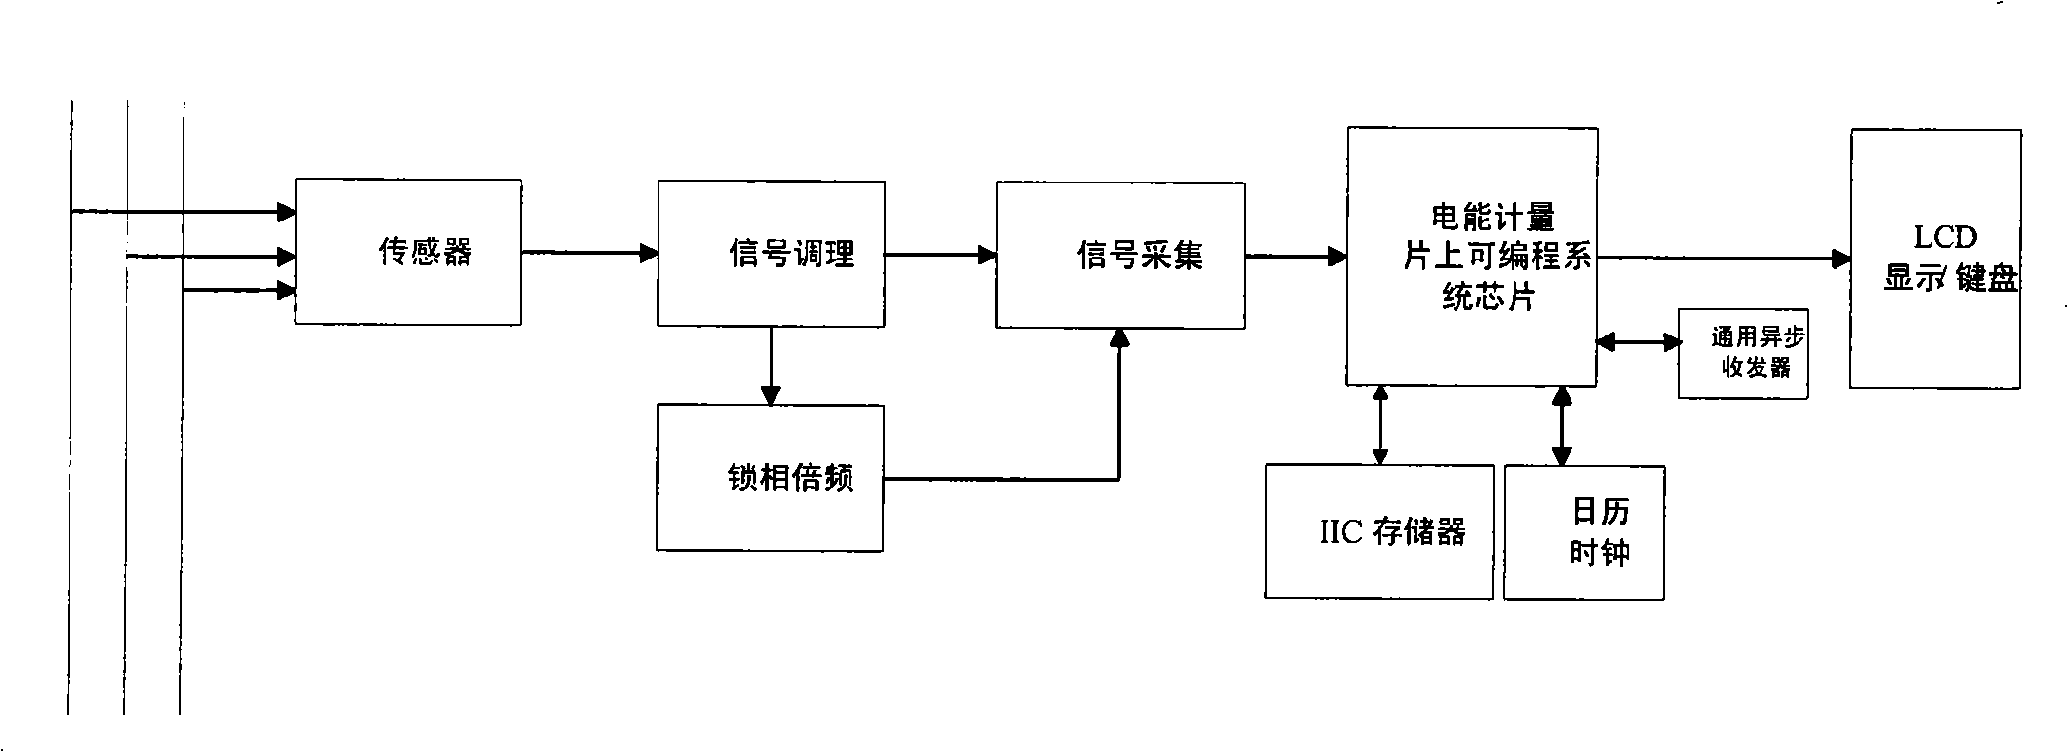 Three-phase electric energy meter based on NIOS II microprocessor